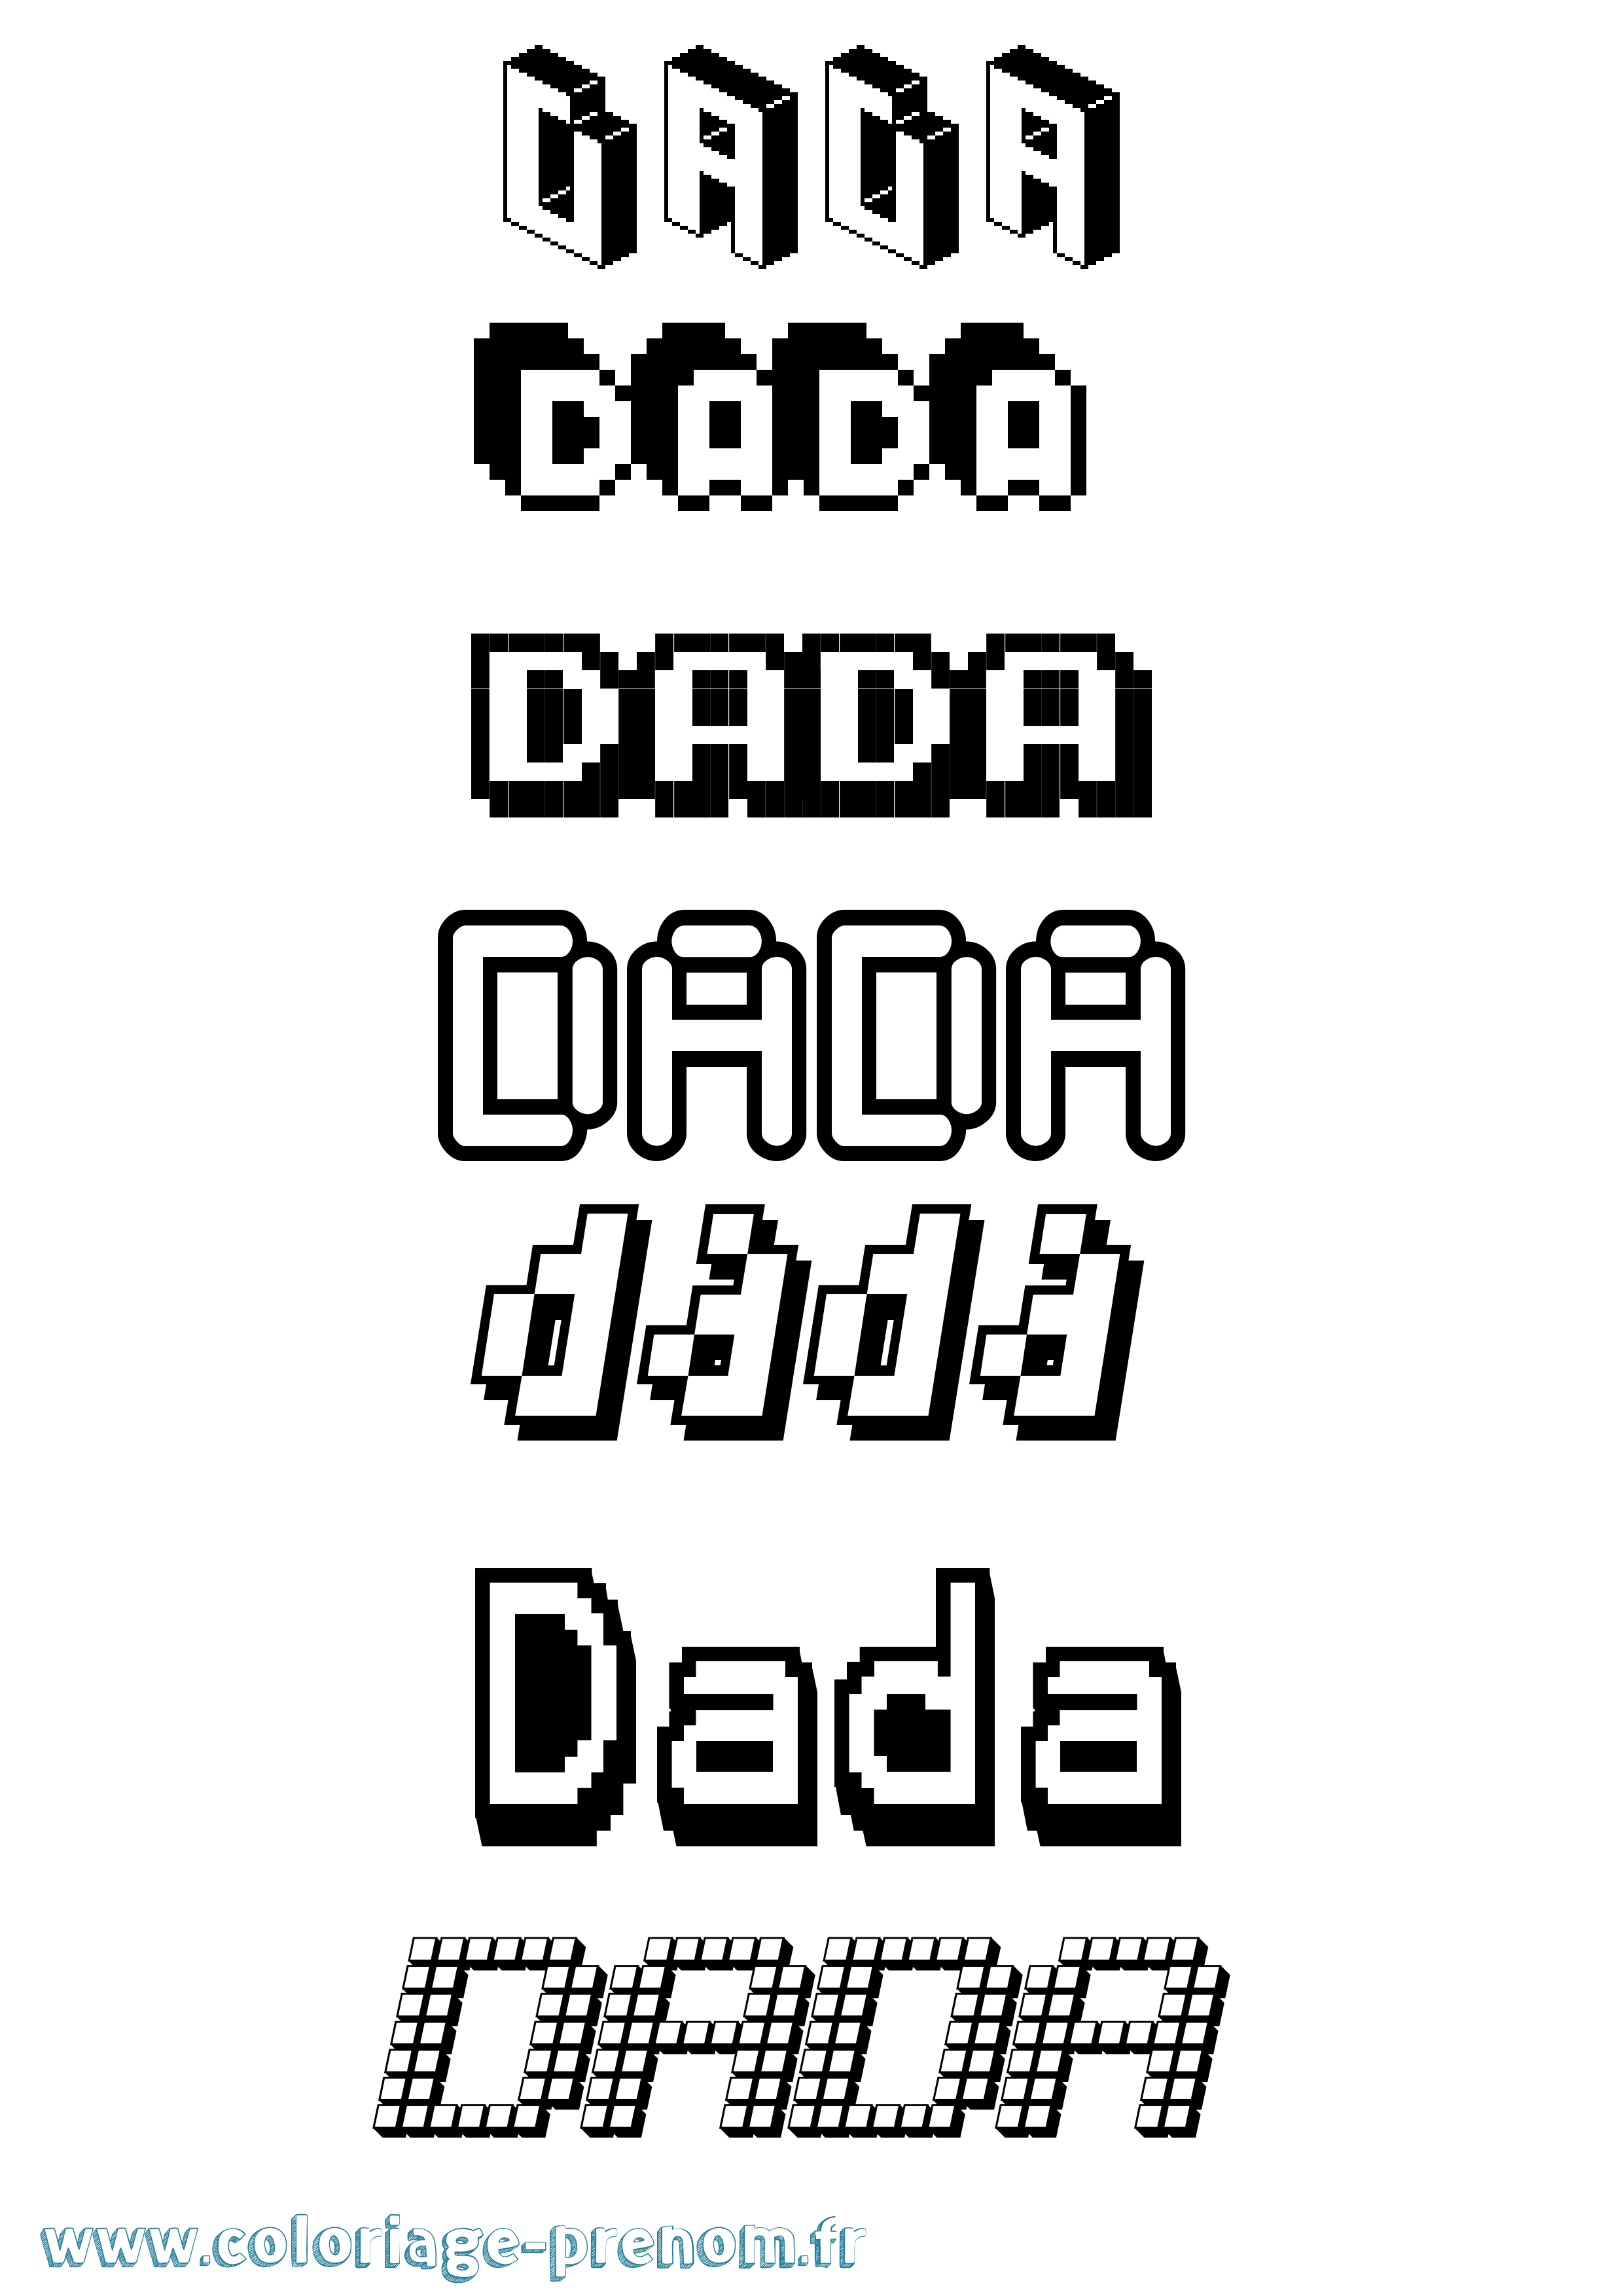 Coloriage prénom Dada Pixel